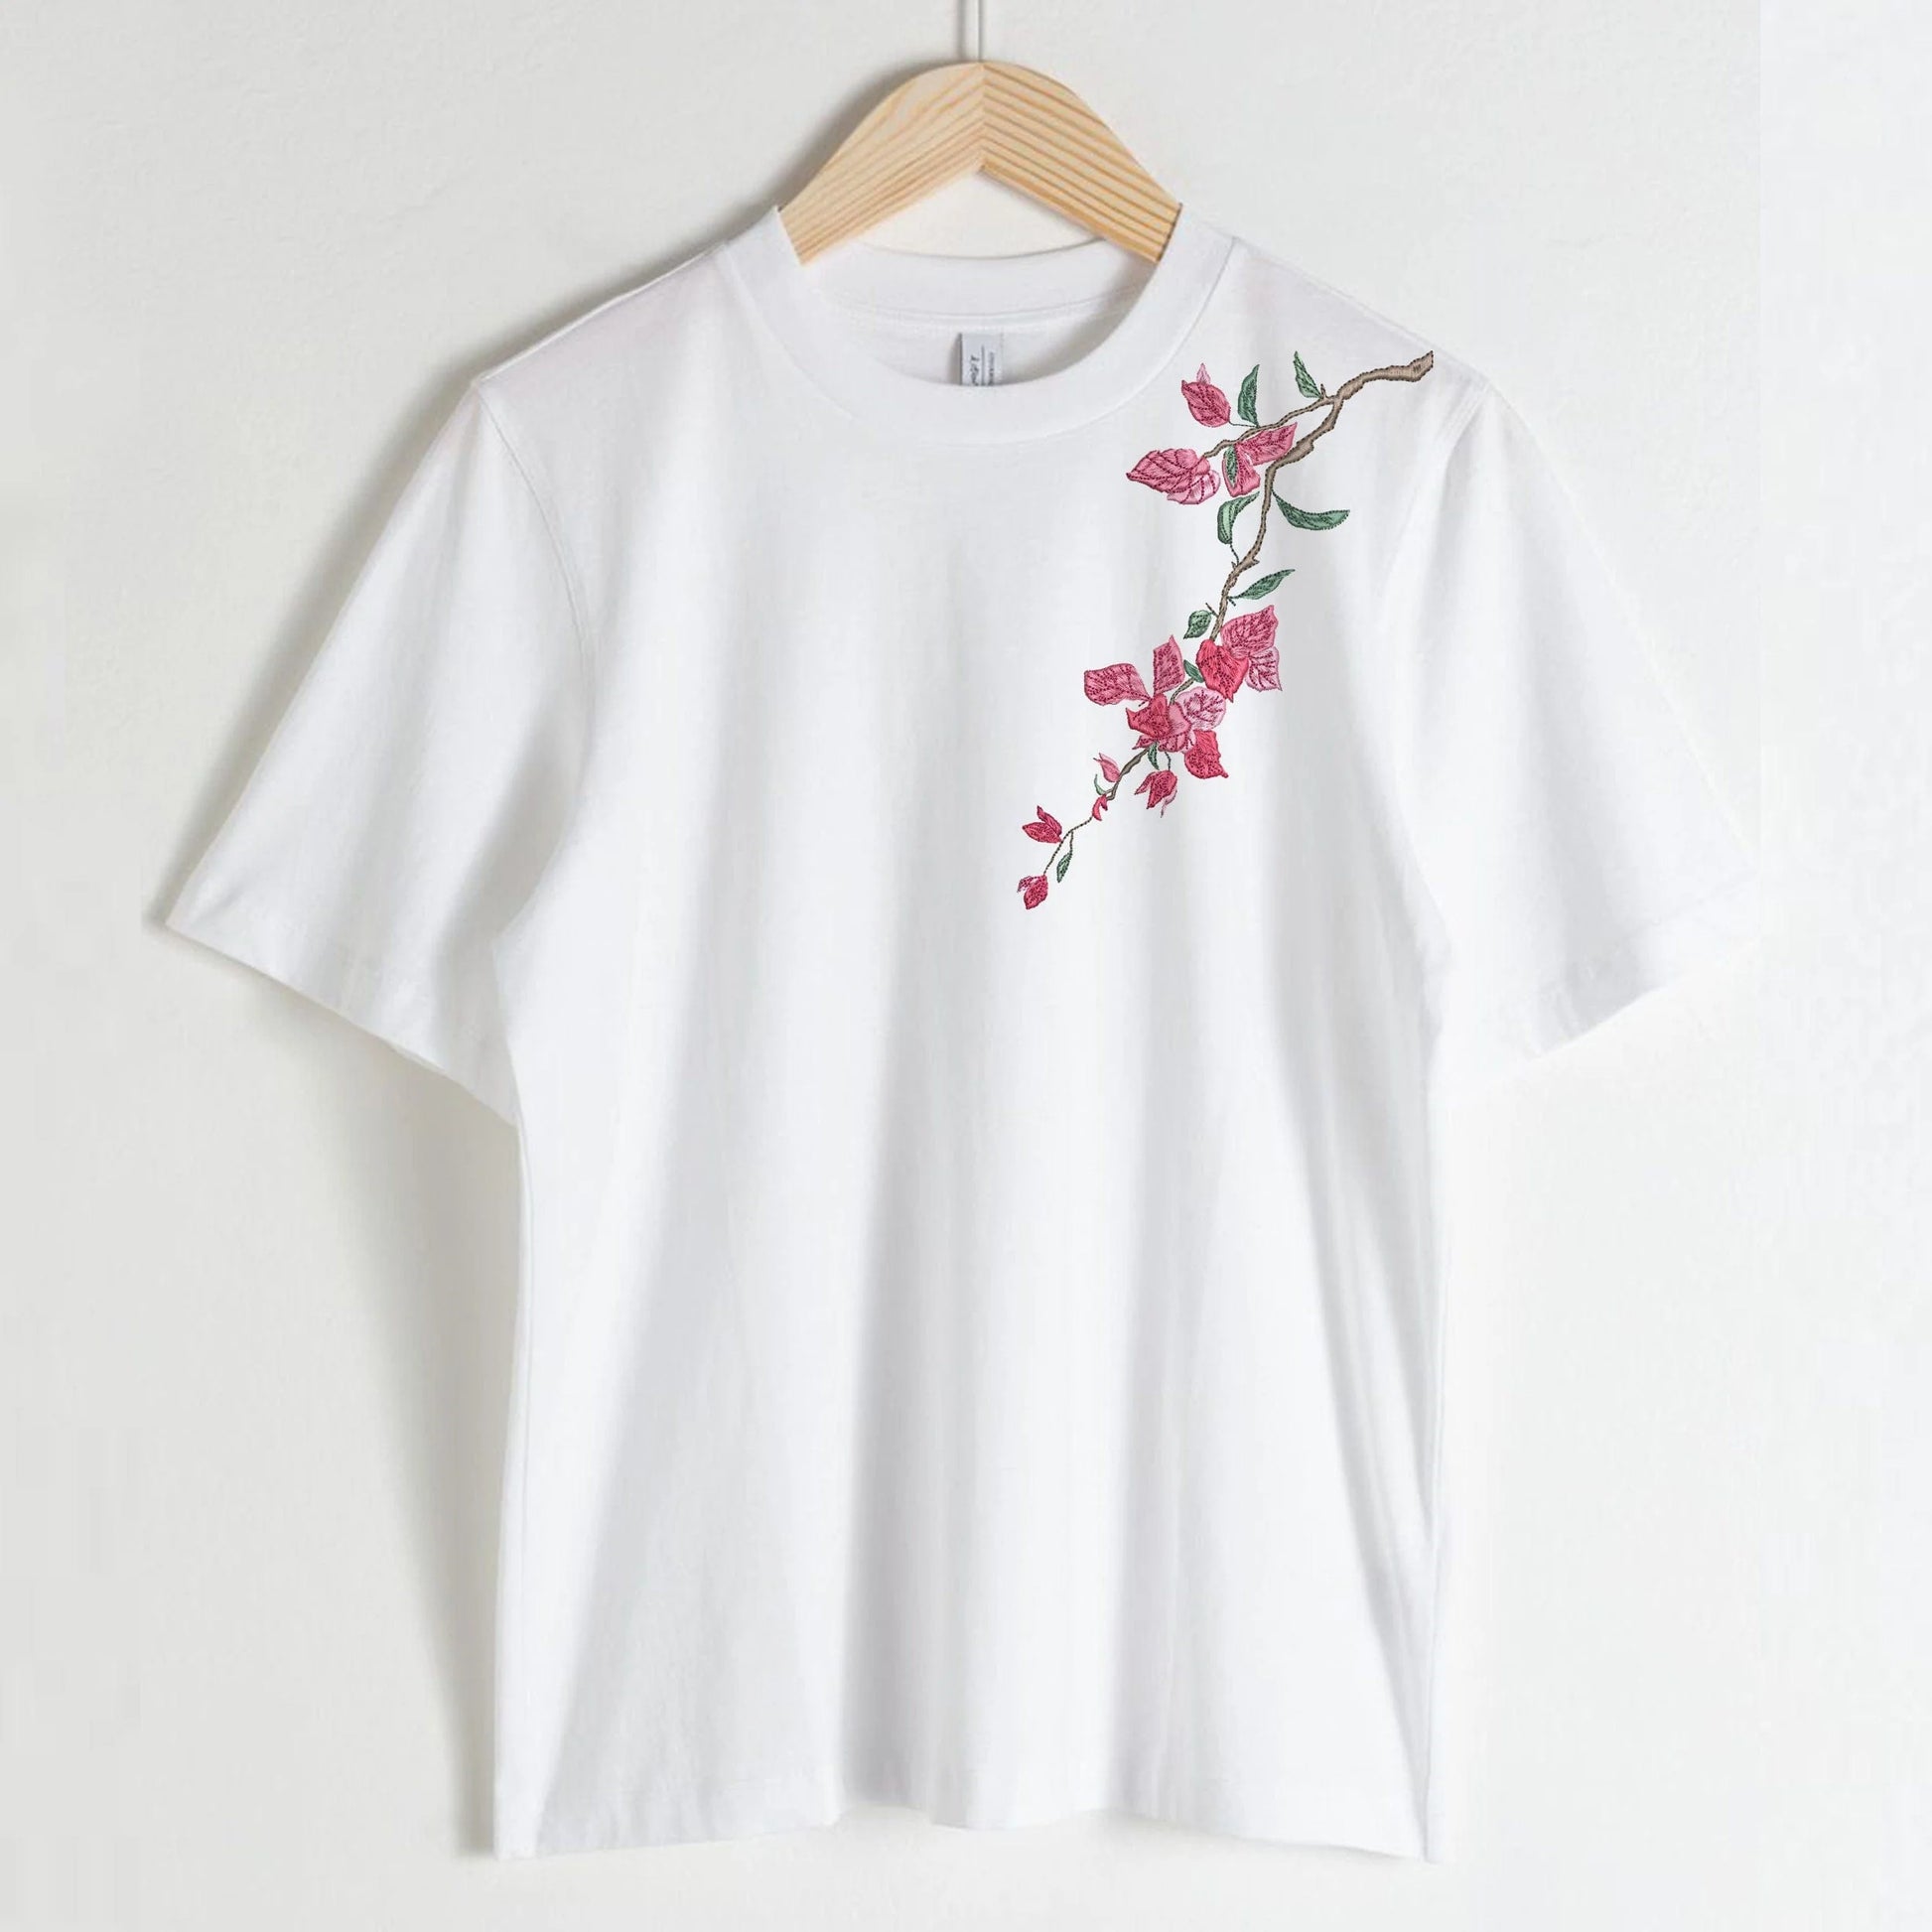 Bougainvillea Flower Machine Embroidery Design Set on t-shirt